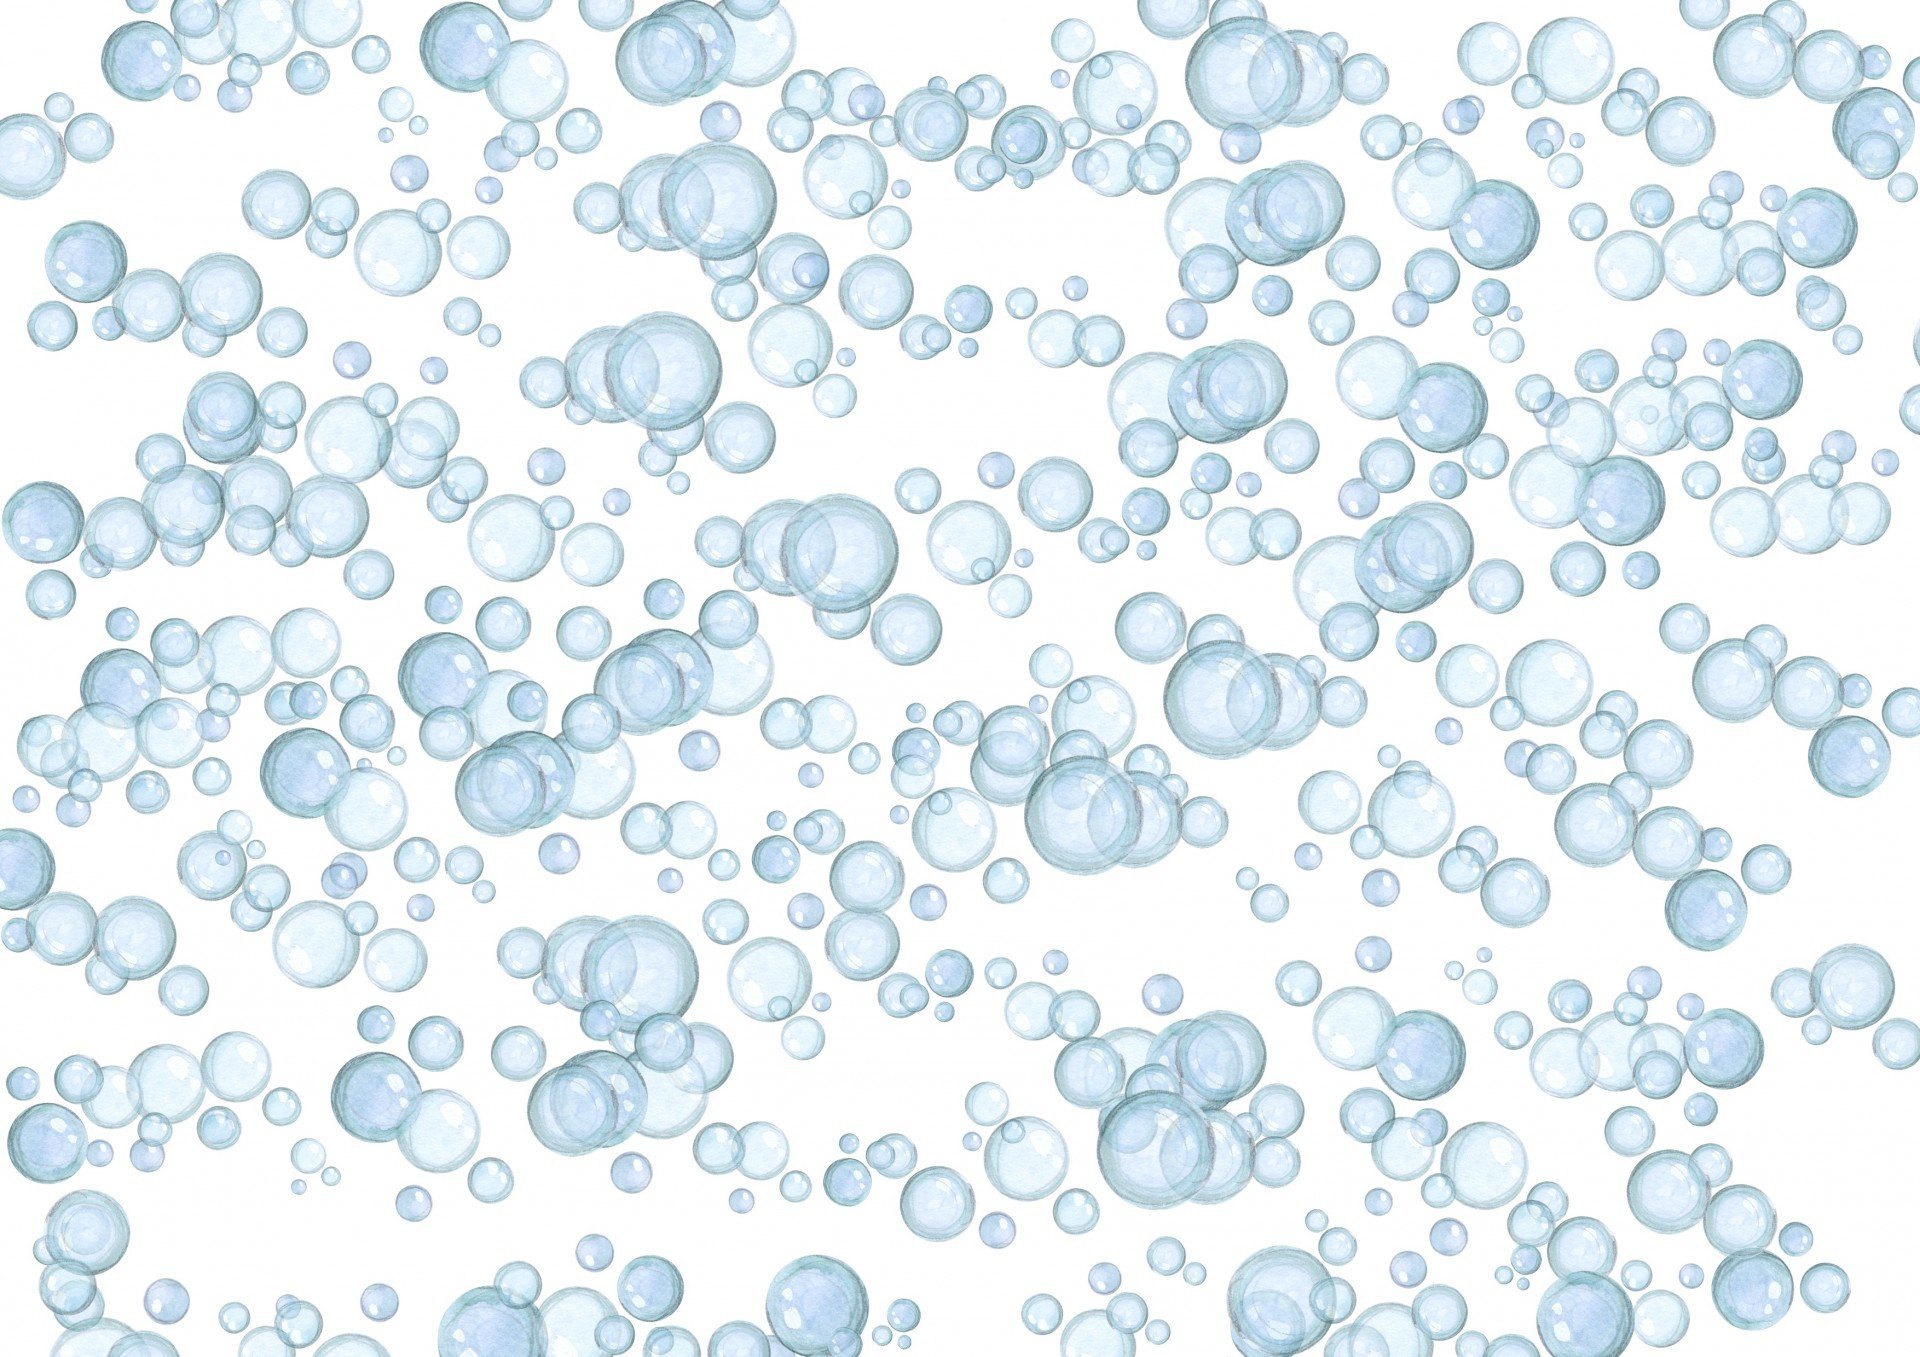 Пена без воды. Мыльные пузыри на белом фоне. Пузыри на прозрачном фоне. Пузырьки на белом фоне. Пузырьки на прозрачном фоне.